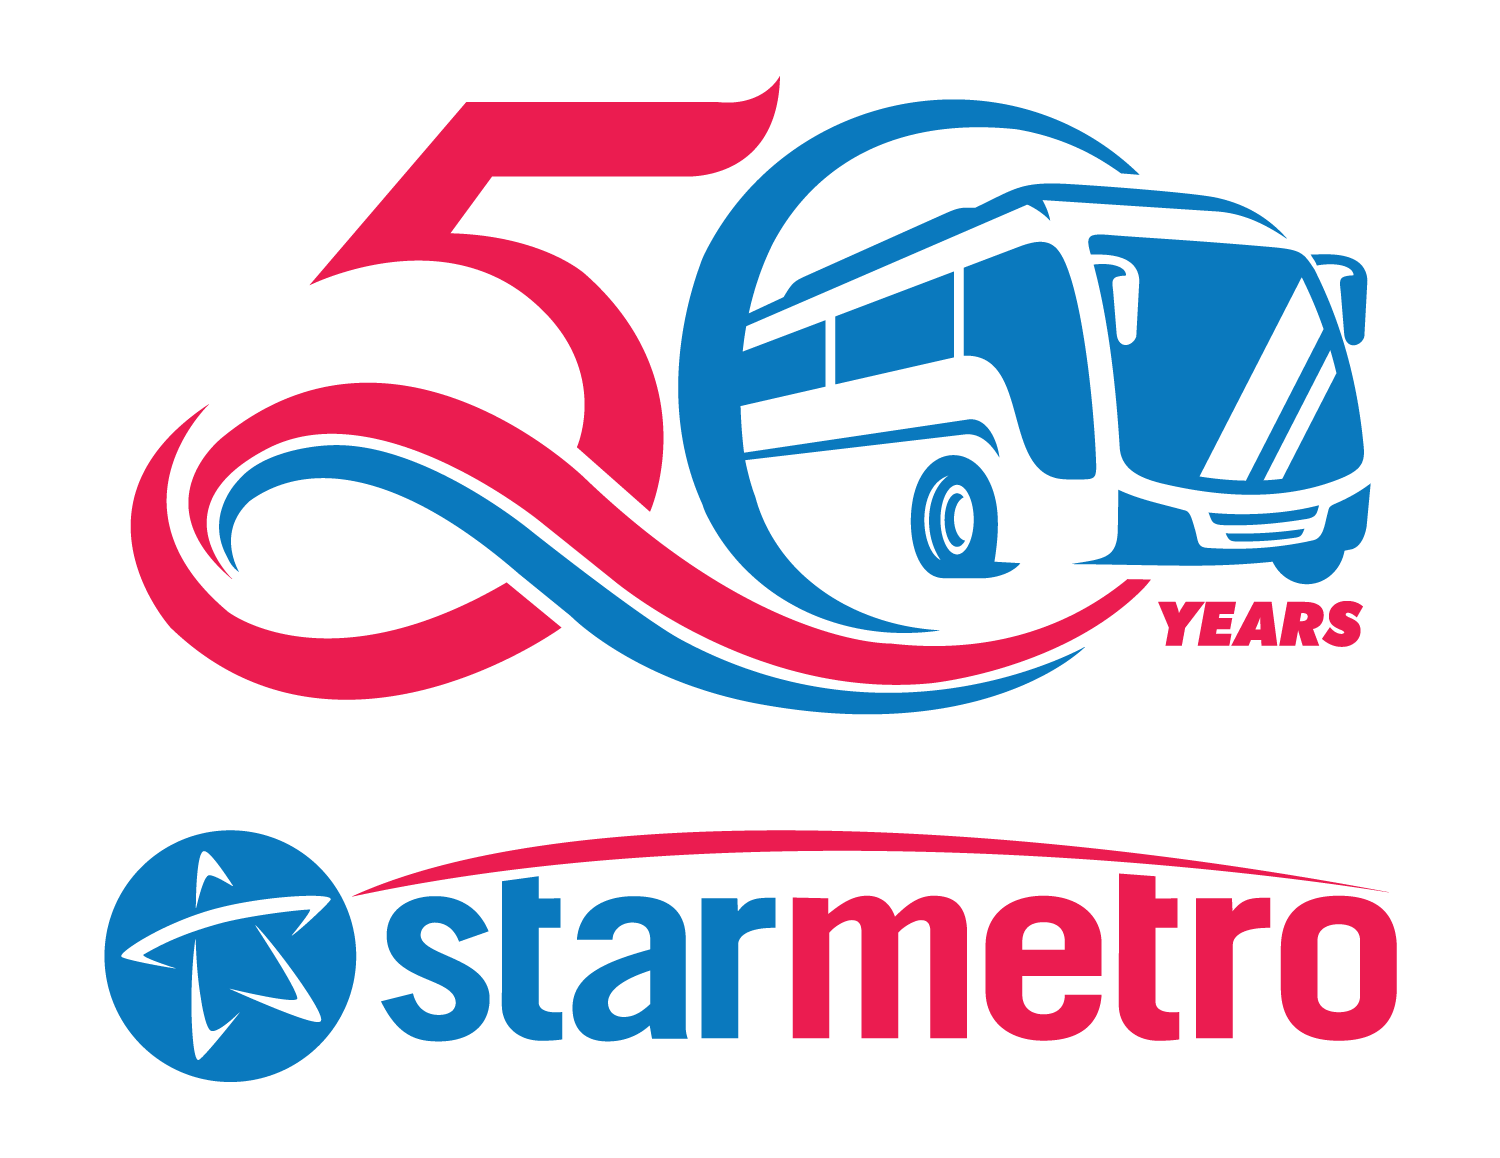 StarMetro Celebrates 50 Years Logo